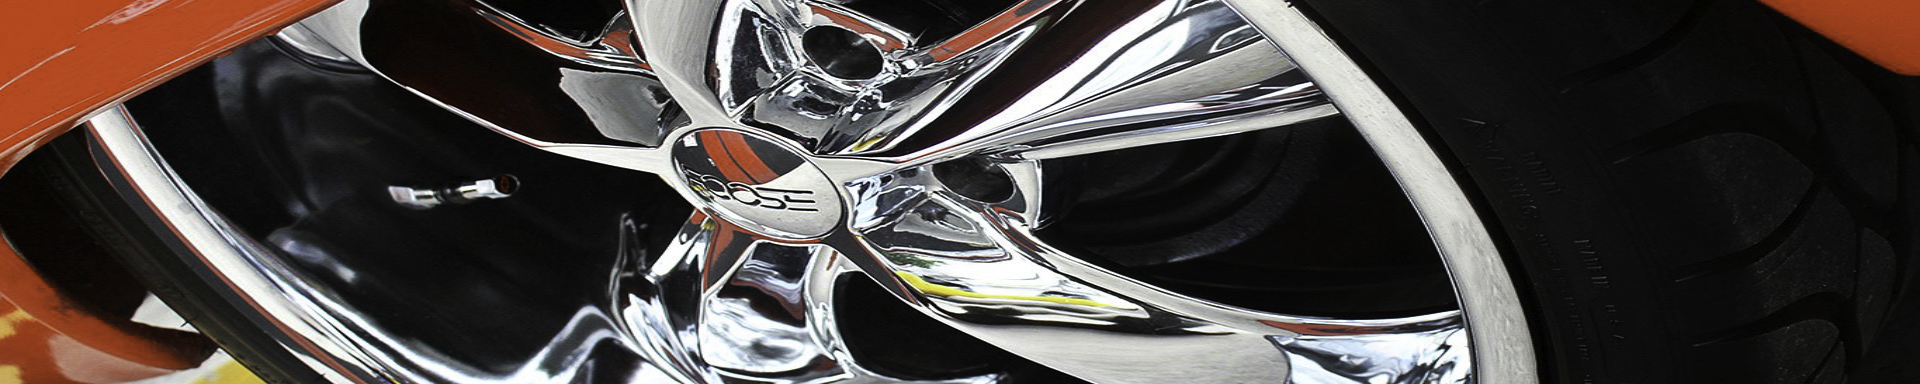 Chrome Wheels & Rims | GarageAndFab.com | Munro Industries gf-100103080303